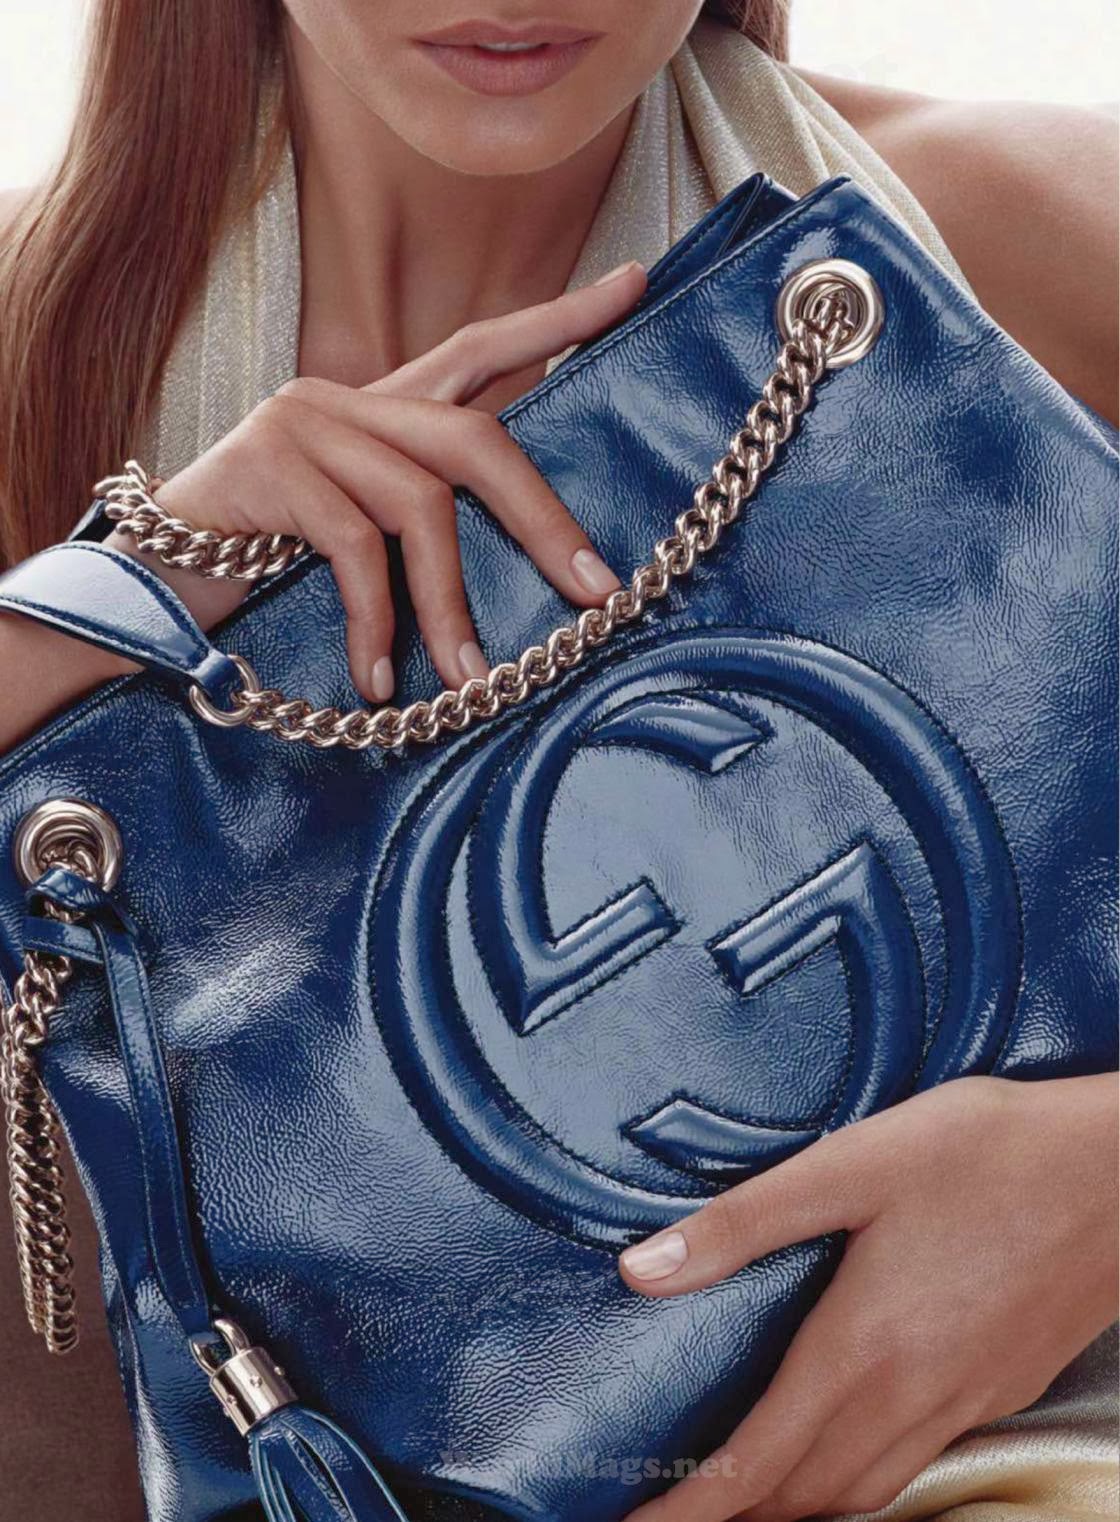 Gucci Bamboo Leather Backpack - Kristina Bazan